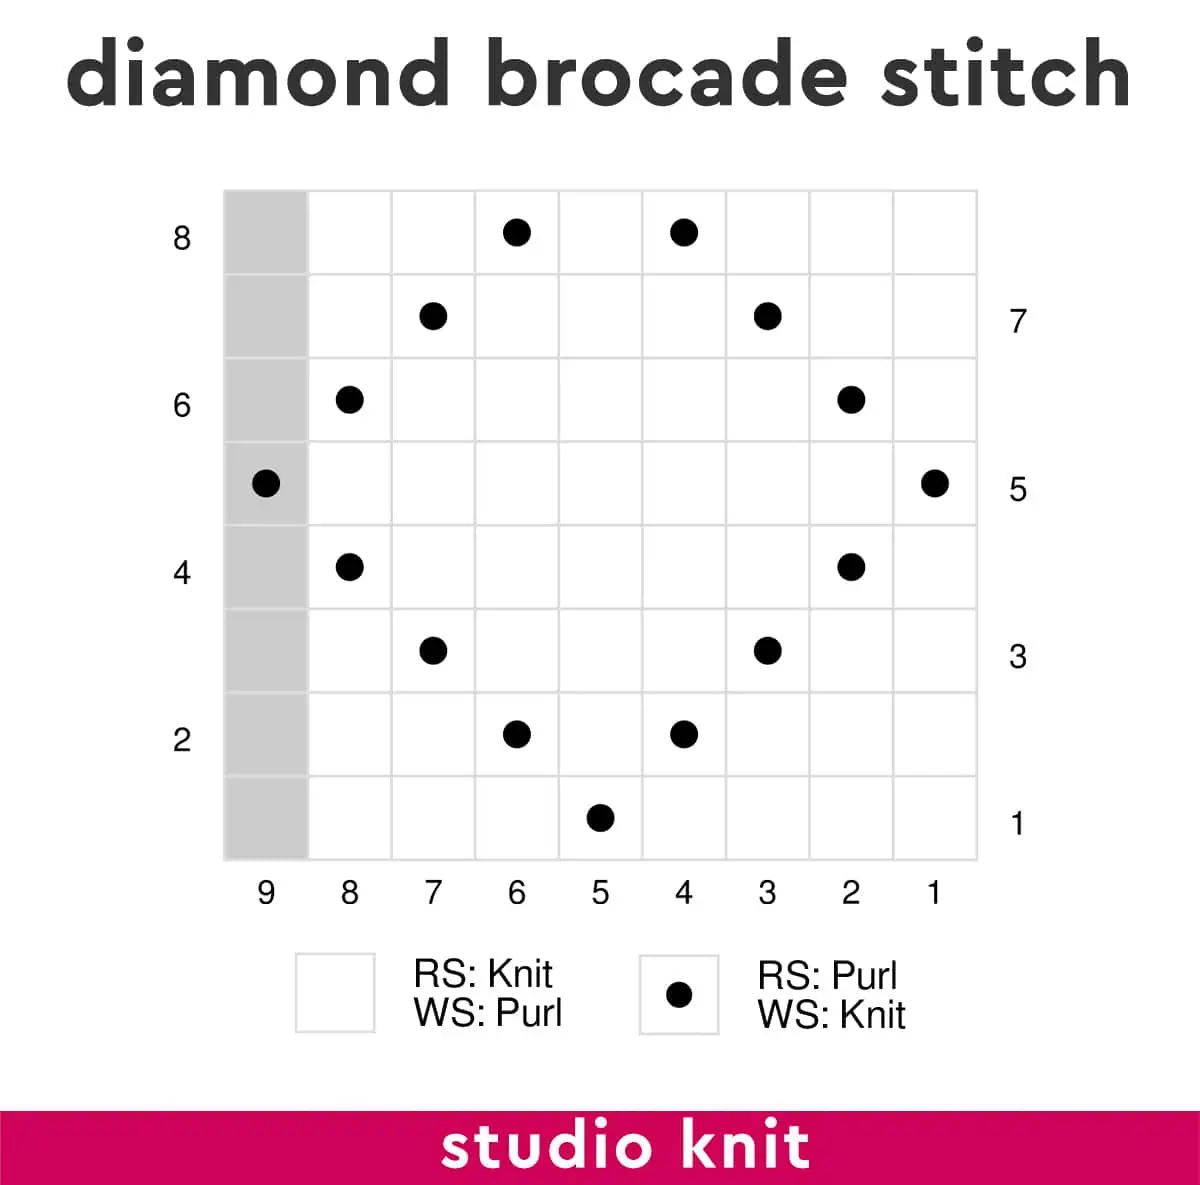 Knitting chart diagram of the Diamond Brocade Stitch by Studio Knit.